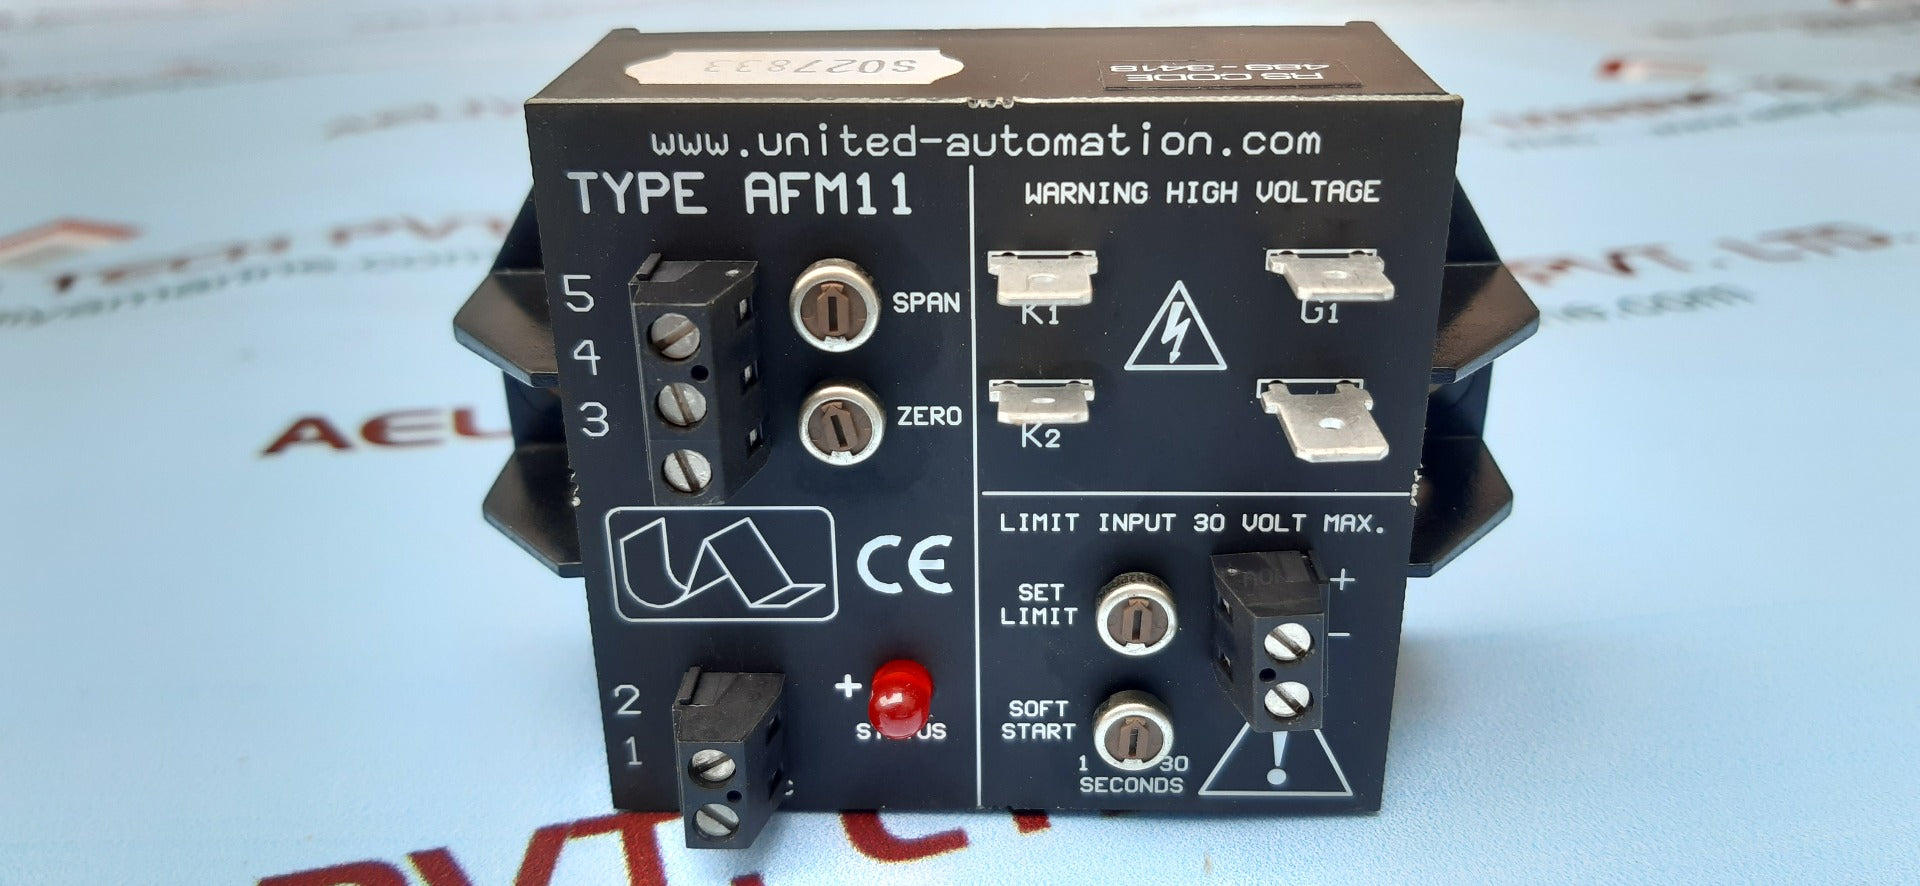 United automation Afm11 thyristor trigger module